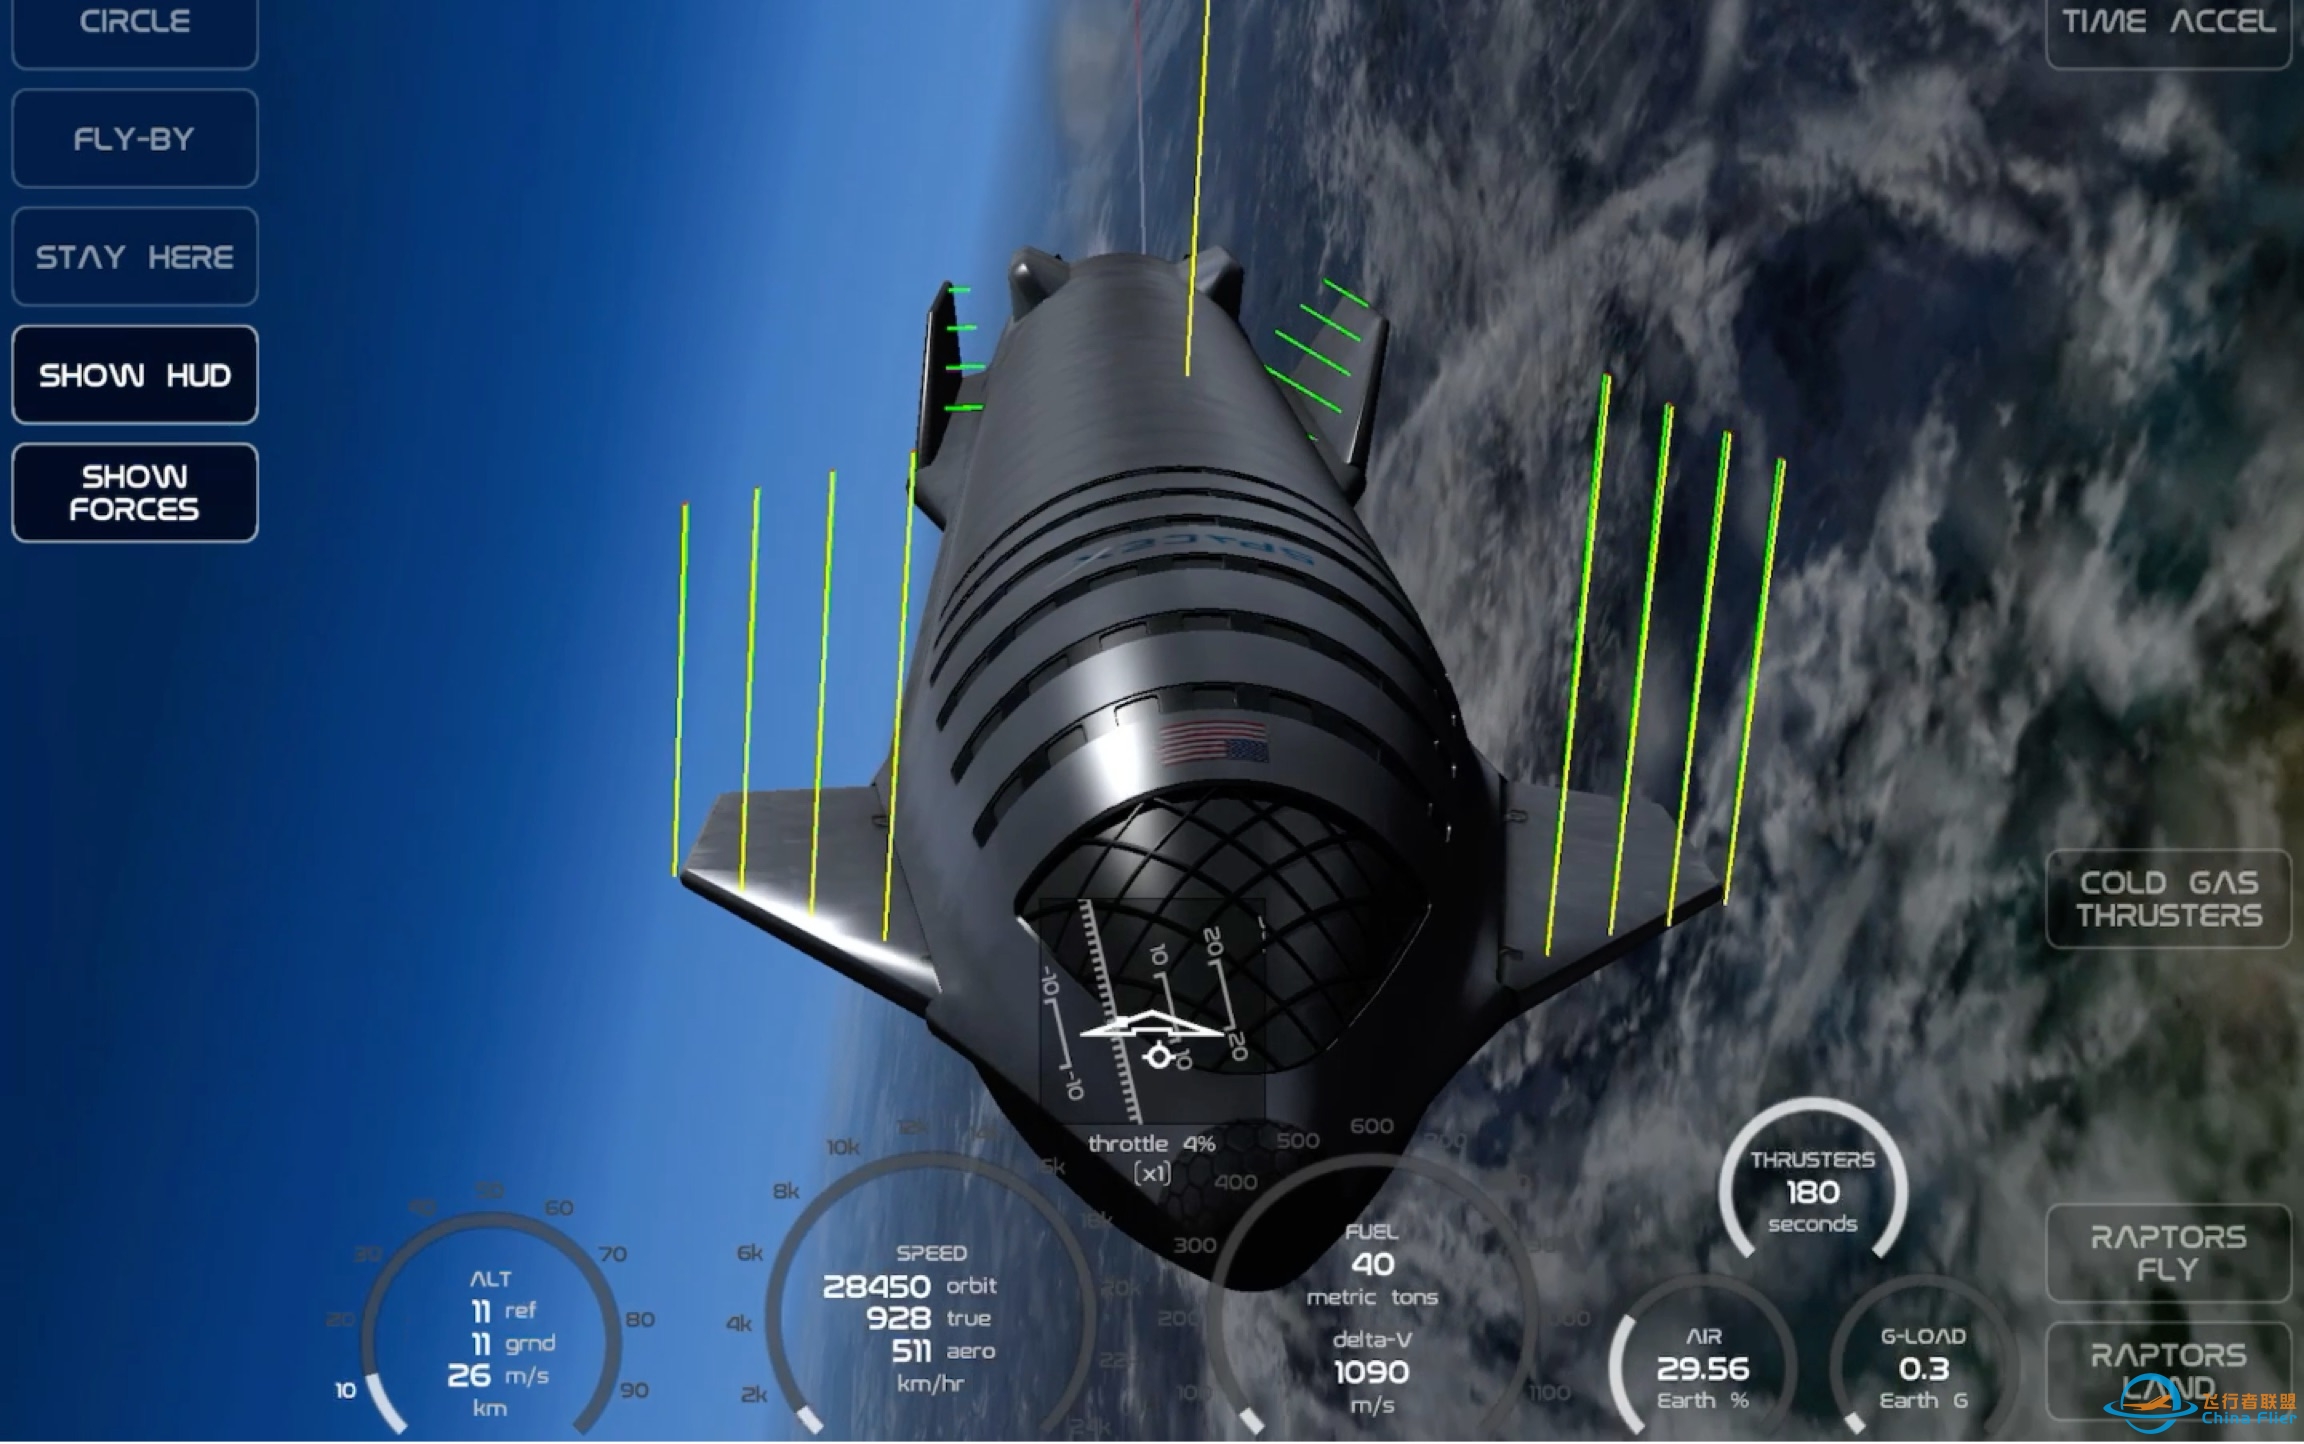 [SpaceX]用X-Plane: Starship模拟星舰高空飞行测试-2659 